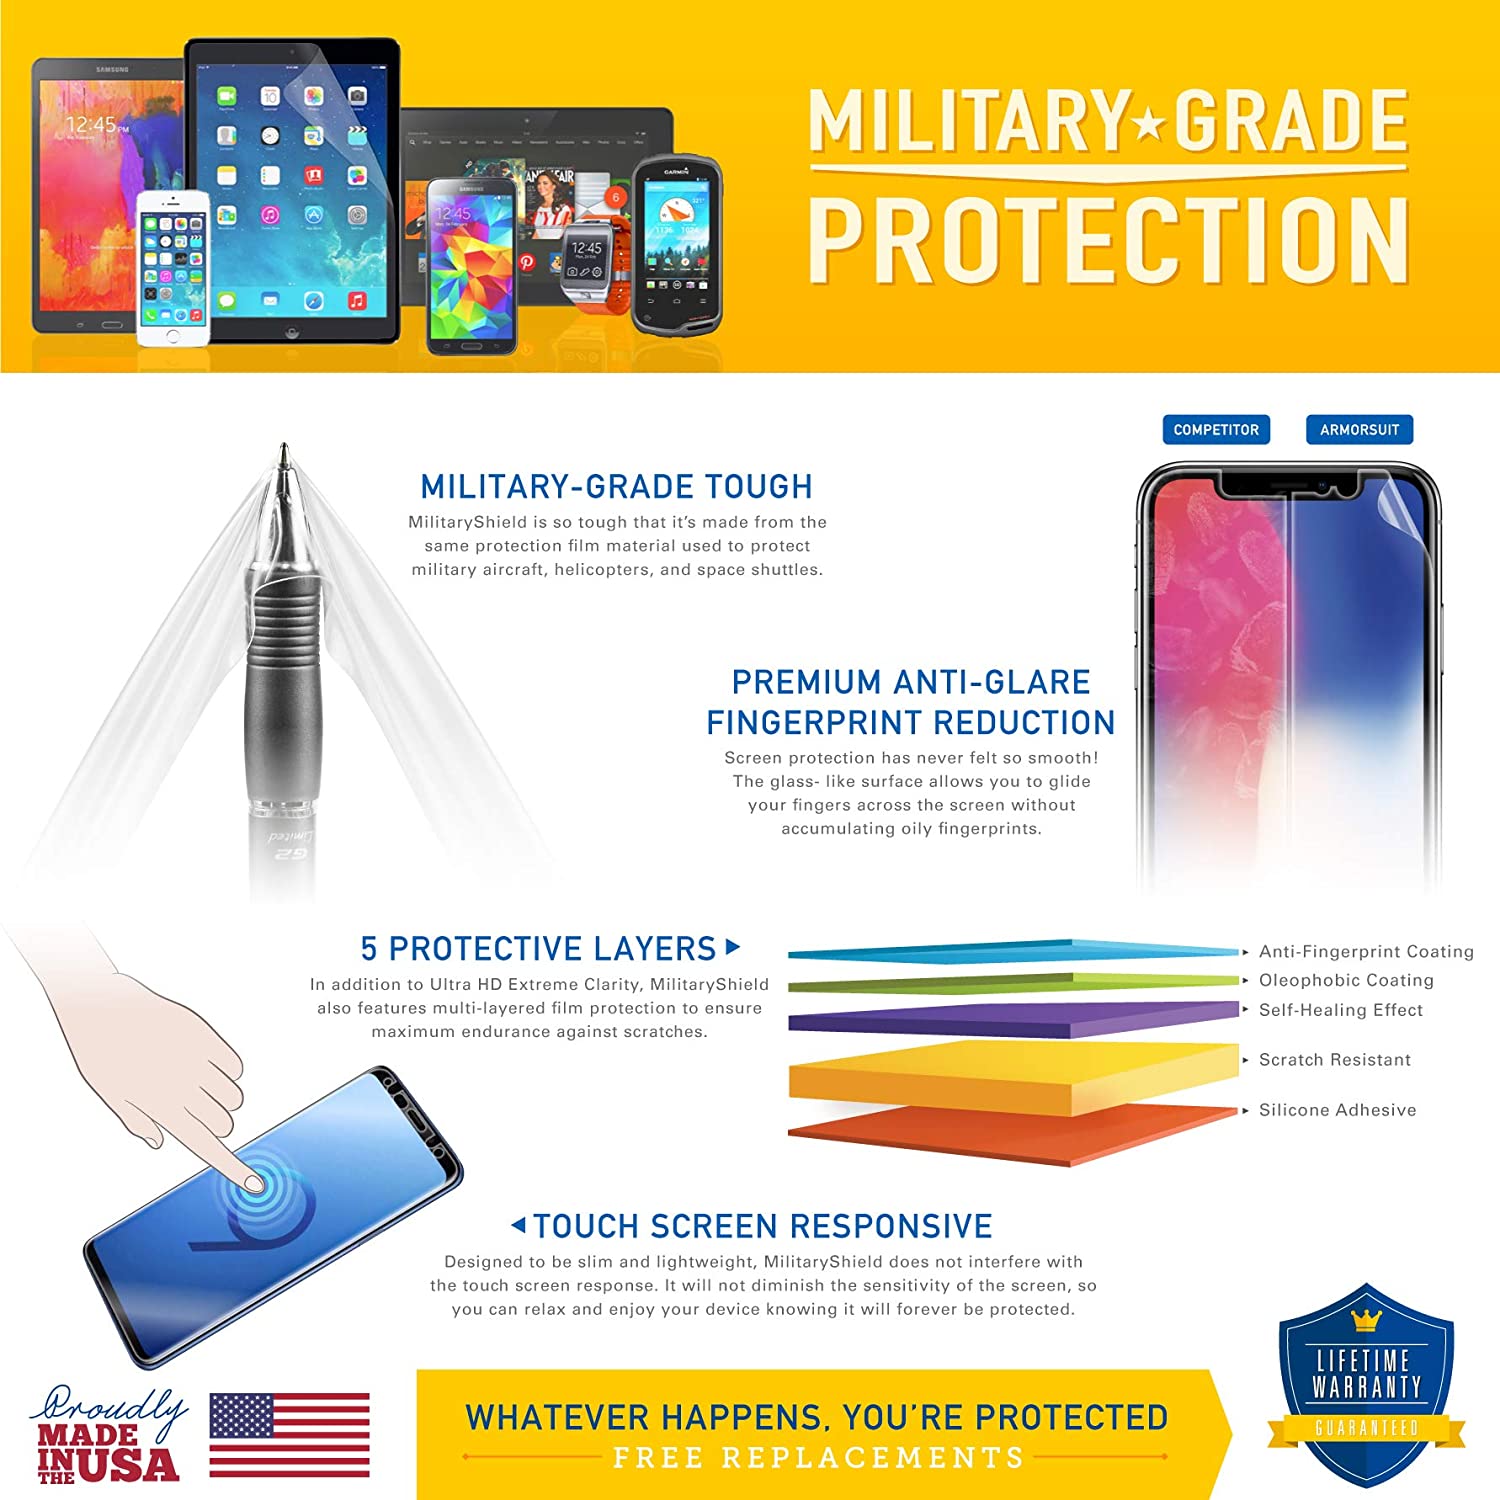 Samsung Galaxy Tab S2 9.7 Anti-Glare (Matte) Screen Protector